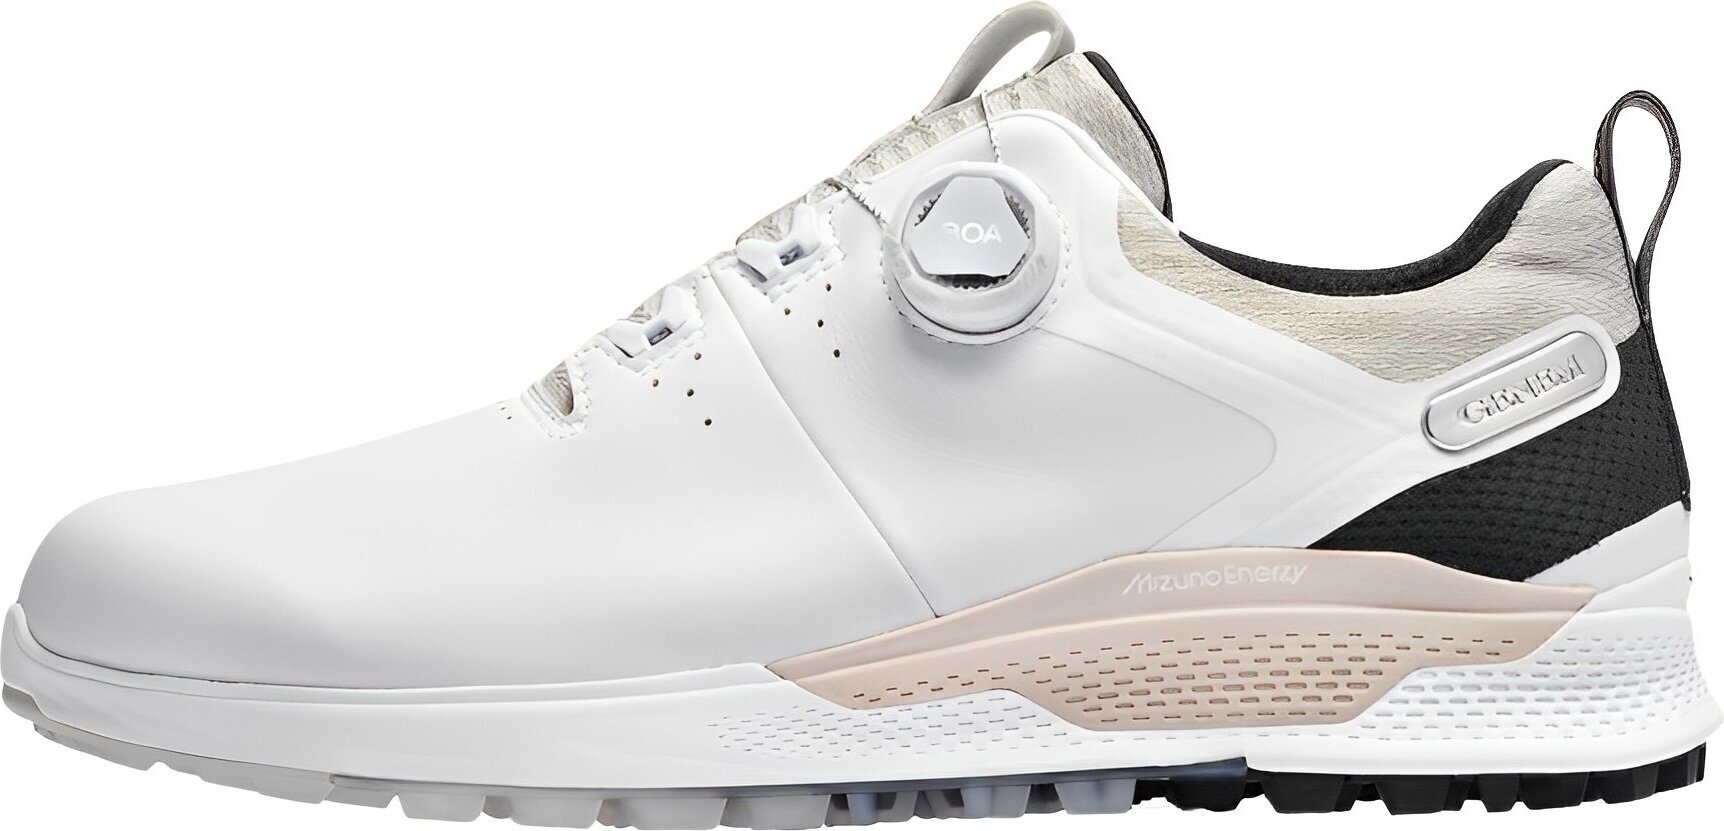 Chaussures de golf pour hommes Mizuno Genem WG Boa White/Black 46,5